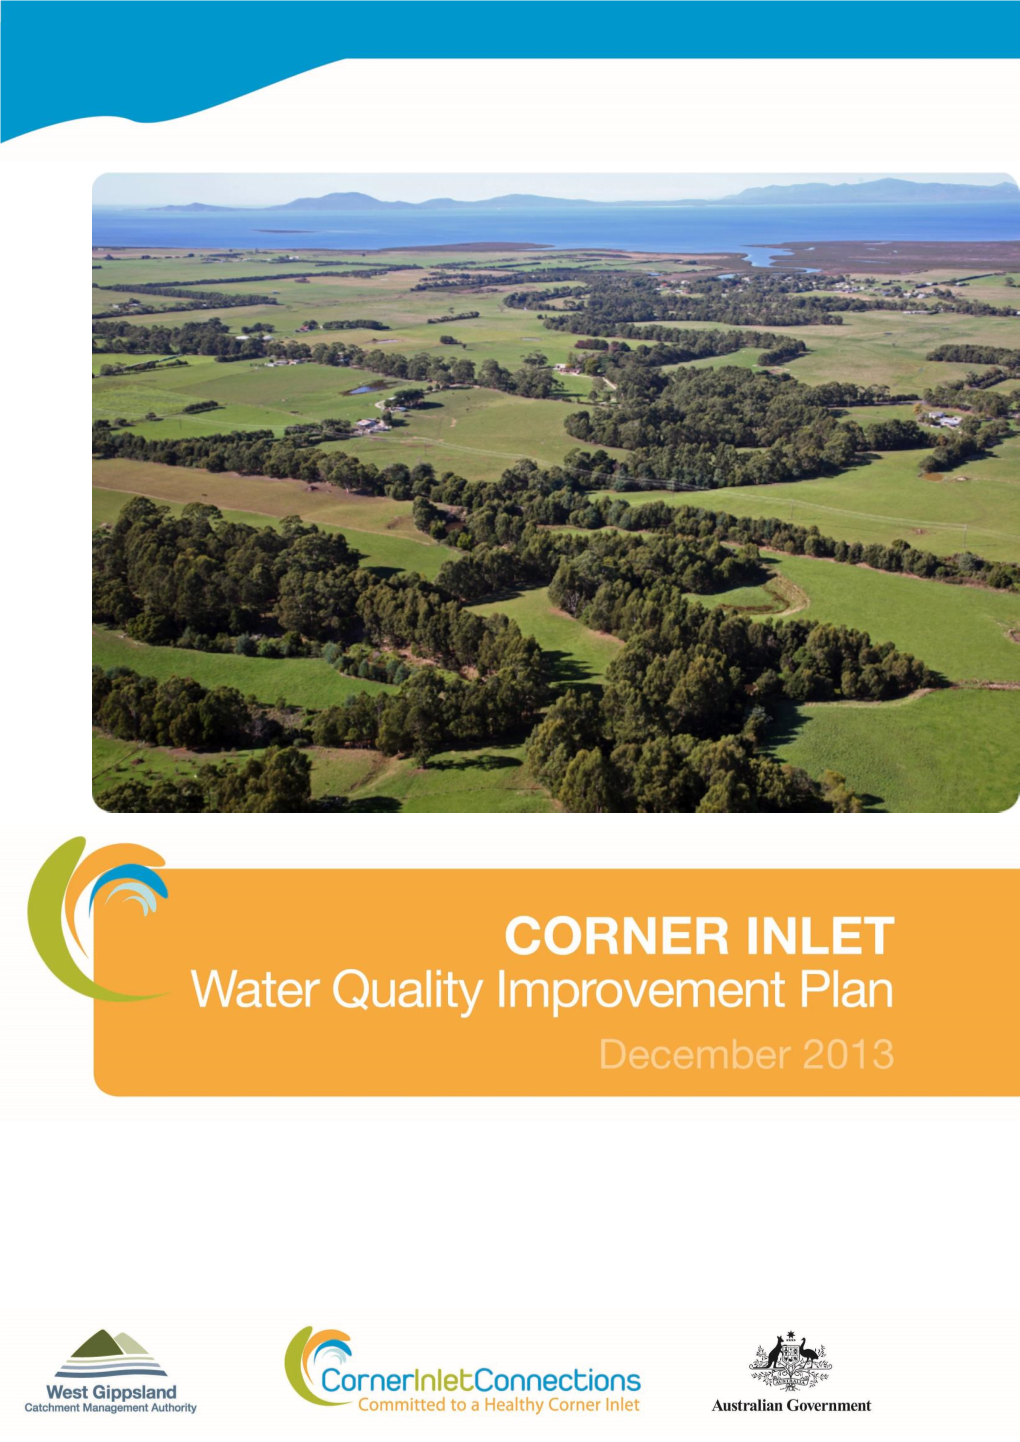 WGCMA-Corner-Inlet-Water-Quality-Improvement-Plan-2013.Pdf